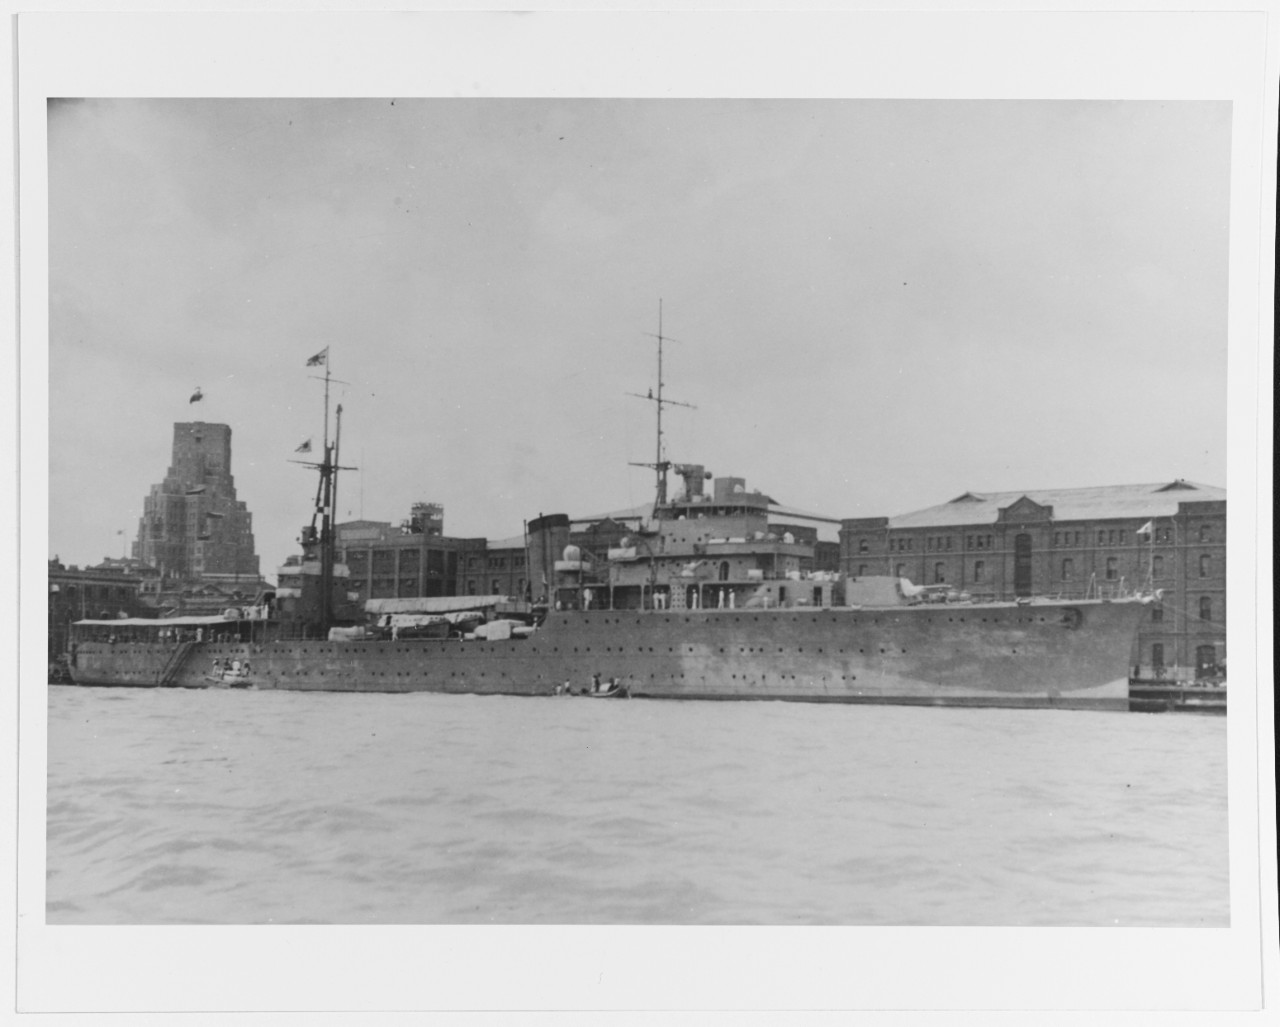 KATORI (Japanese training cruiser)